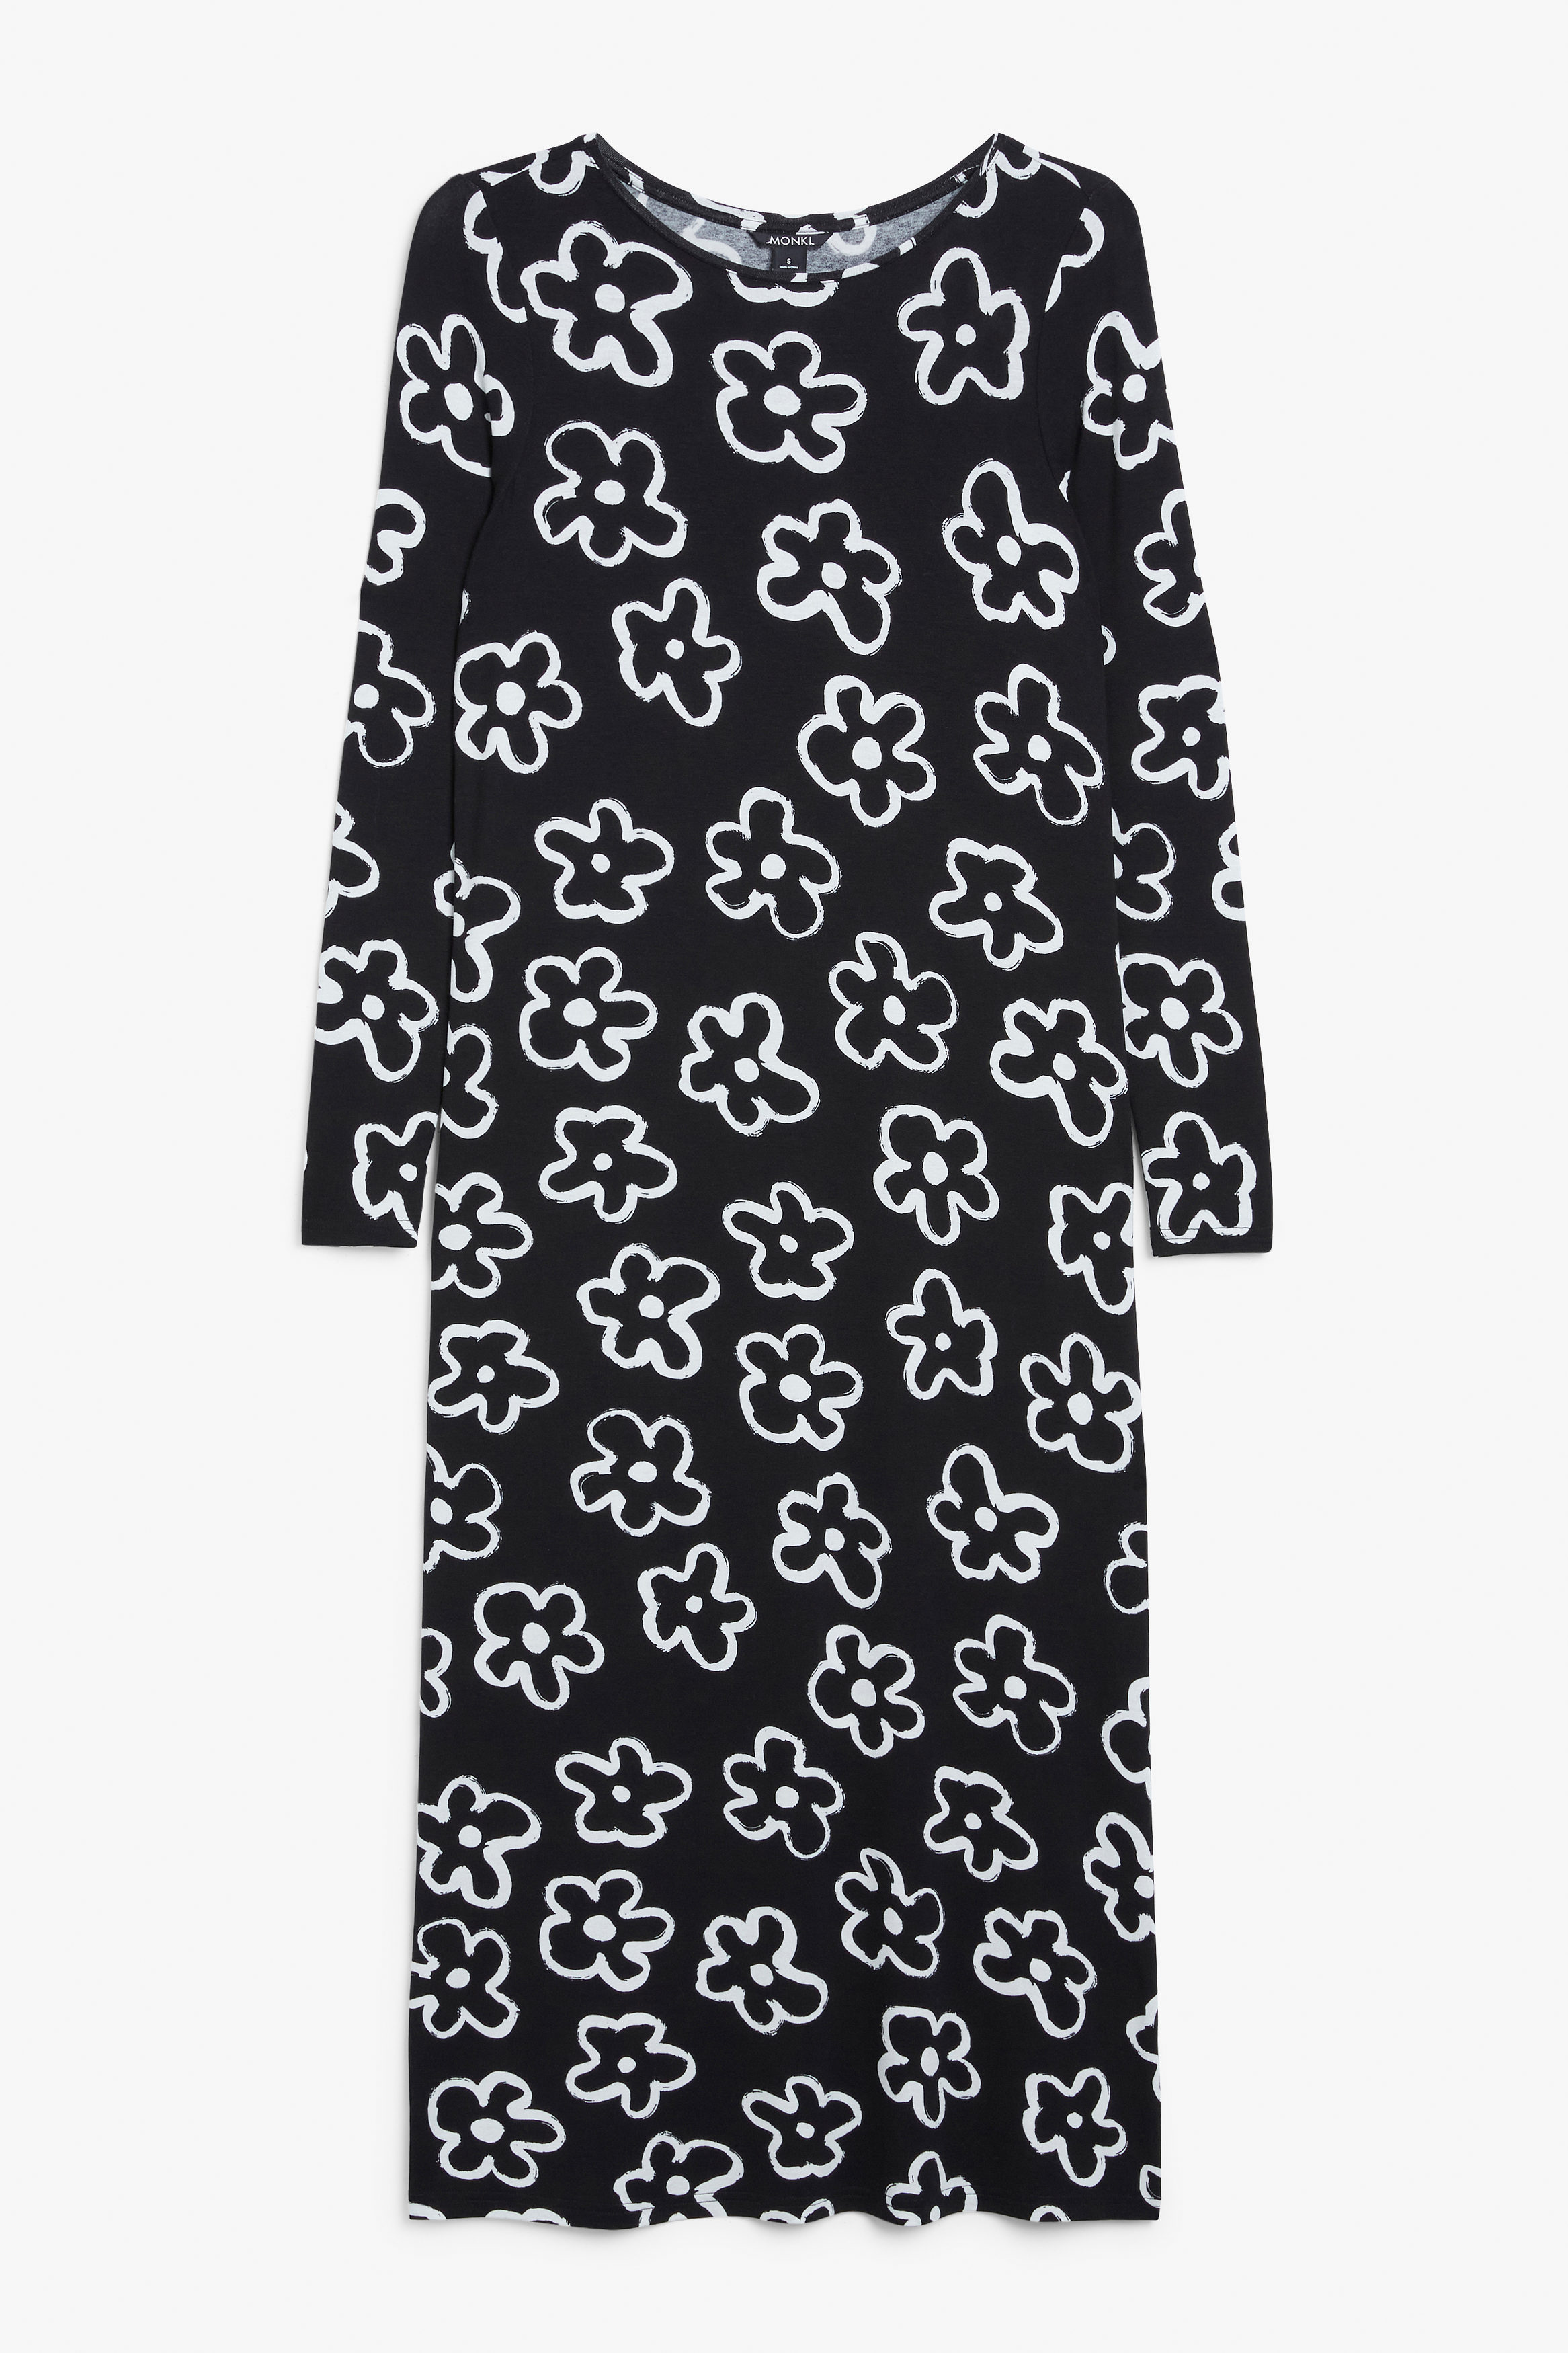 Billede af Monki Long Sleeved Jersey Dress Black & White Flowers, Hverdagskjoler I størrelse S